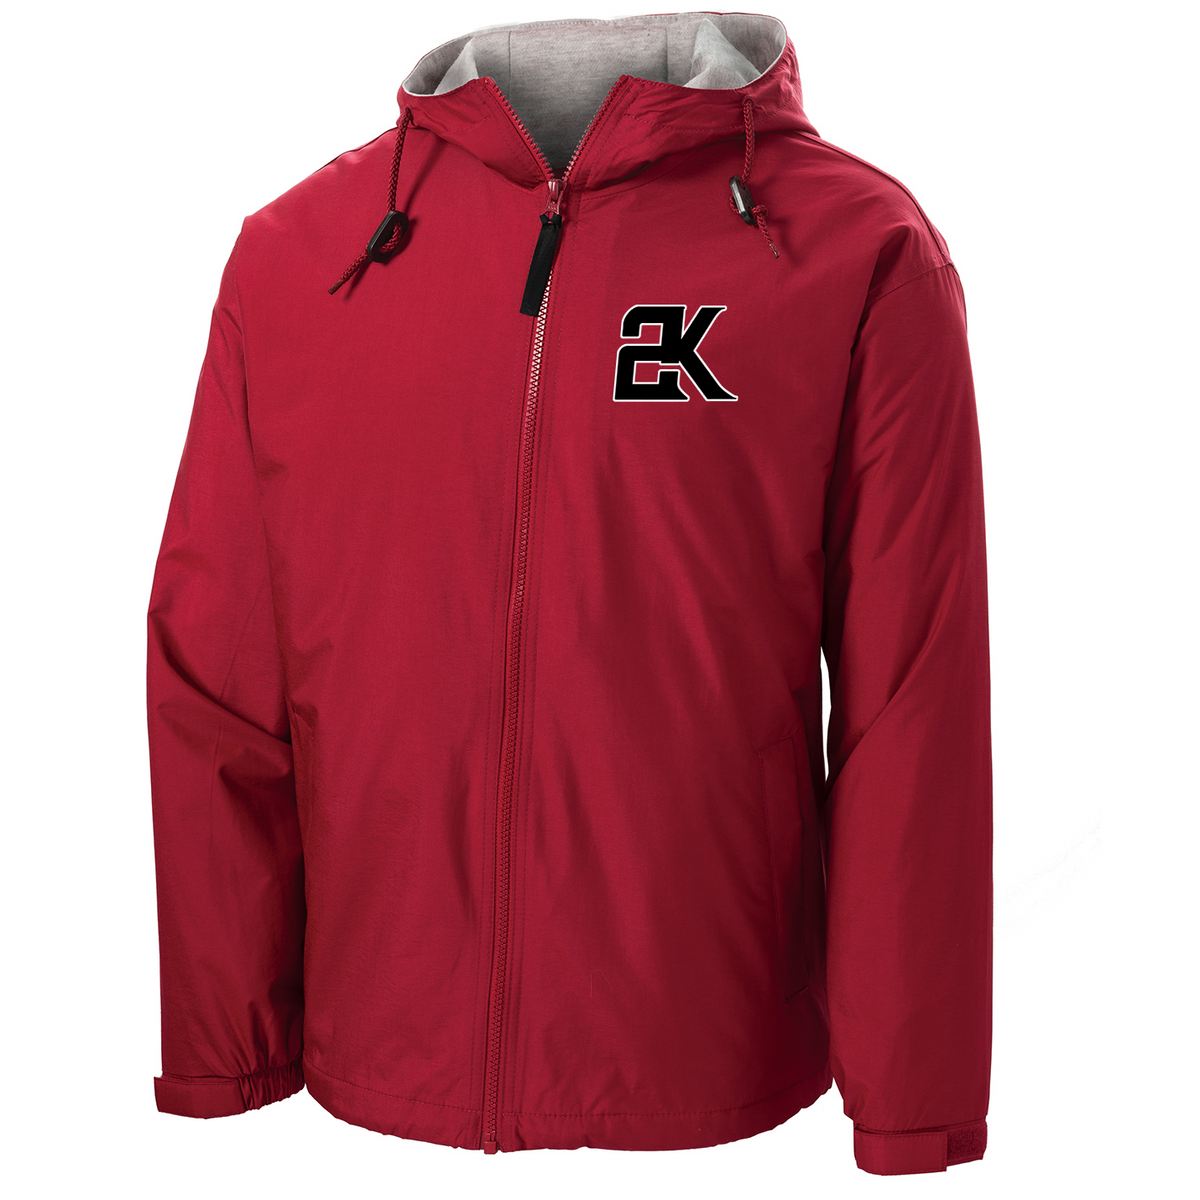 2K Softball Hooded Jacket